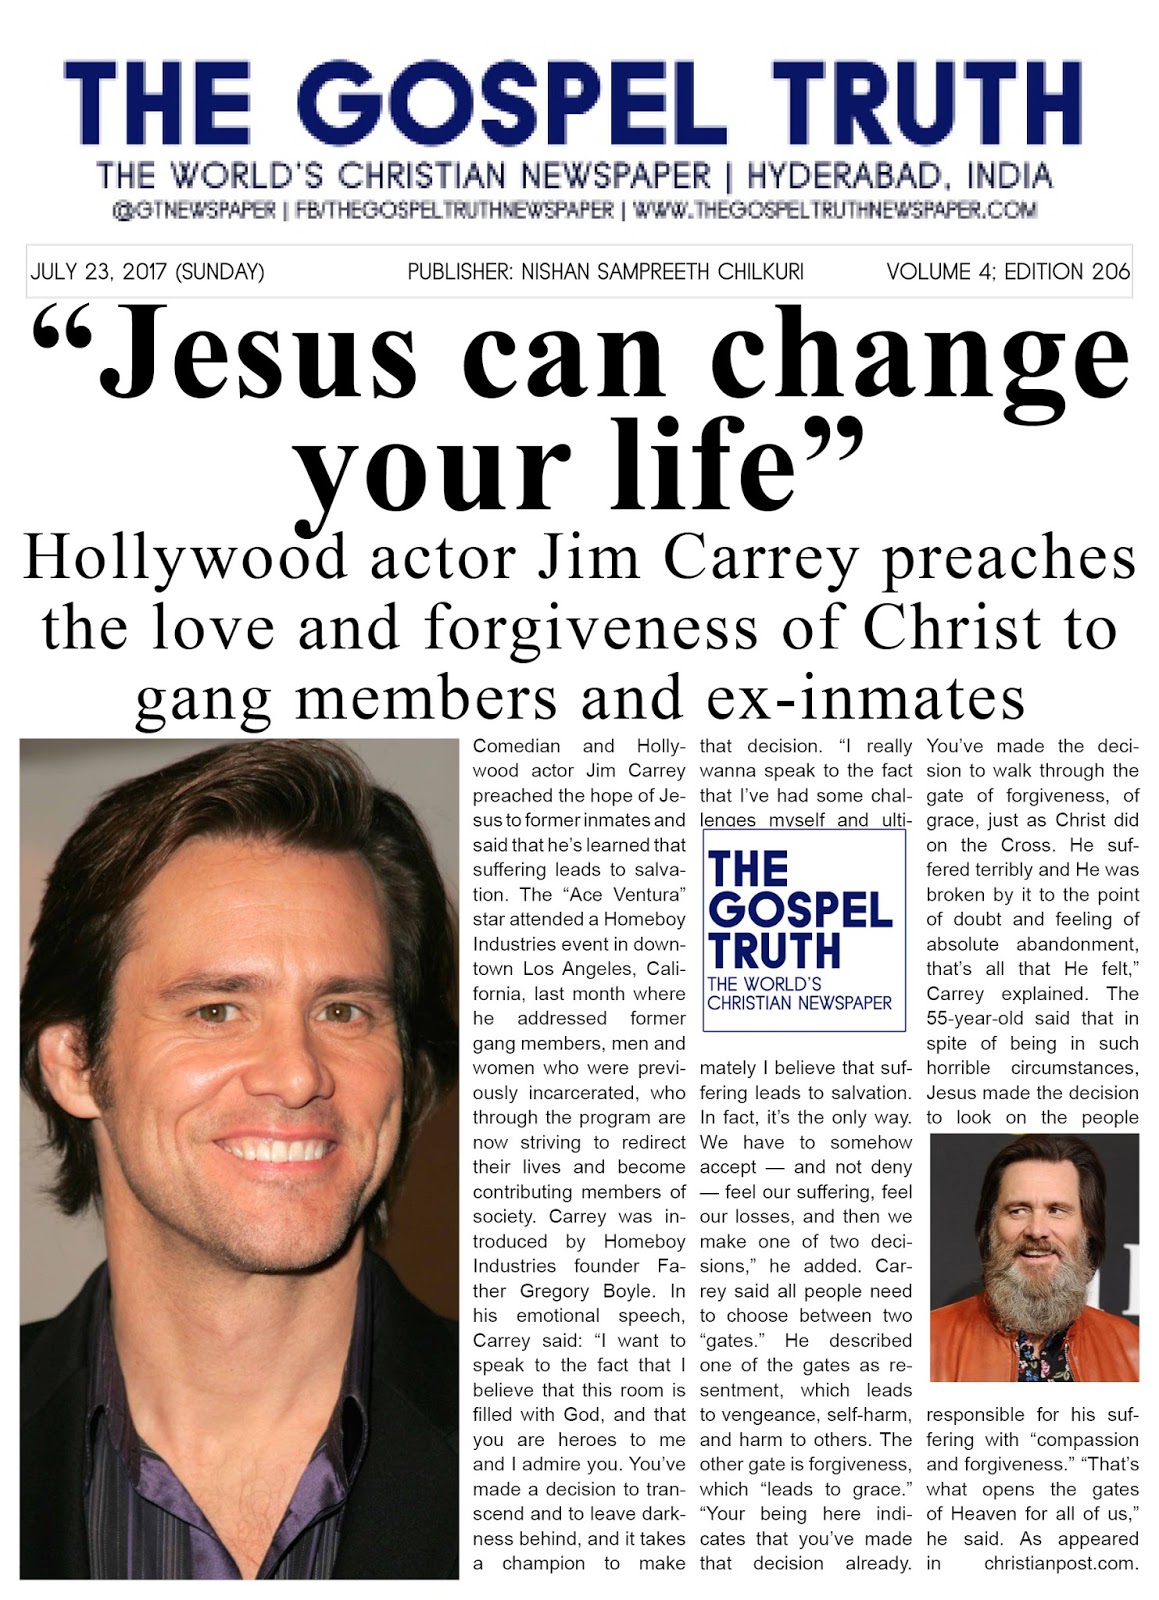 The Gospel According to Jim Carrey